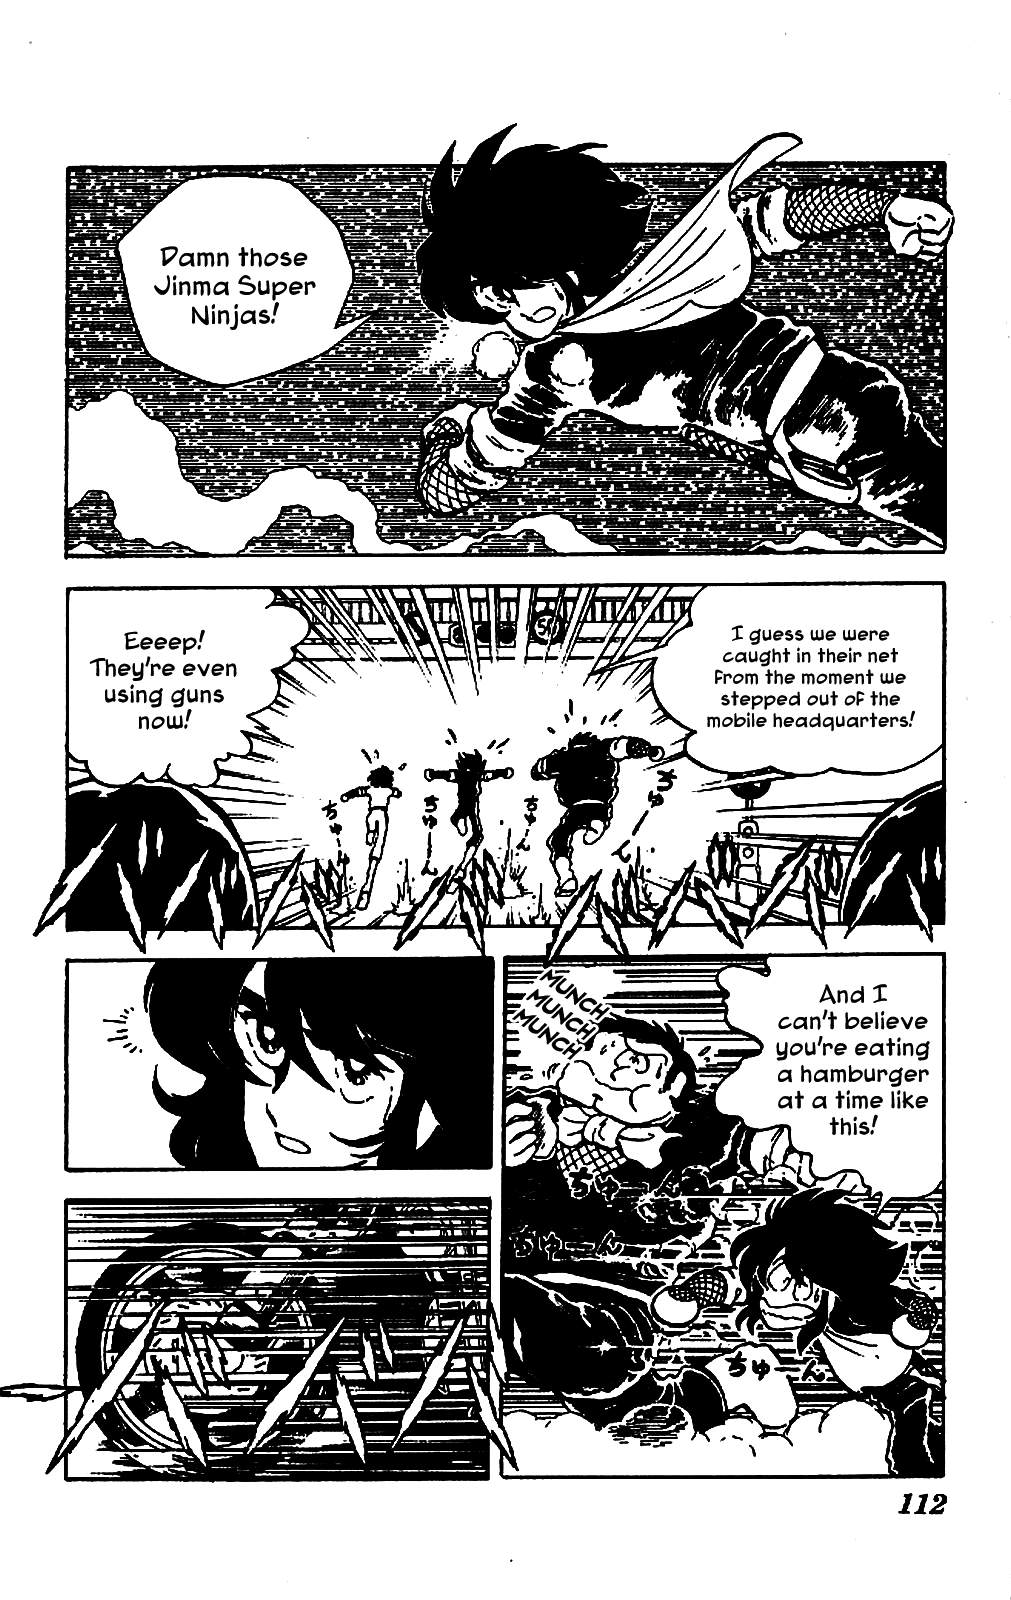 Super Ninja Dan - Page 3